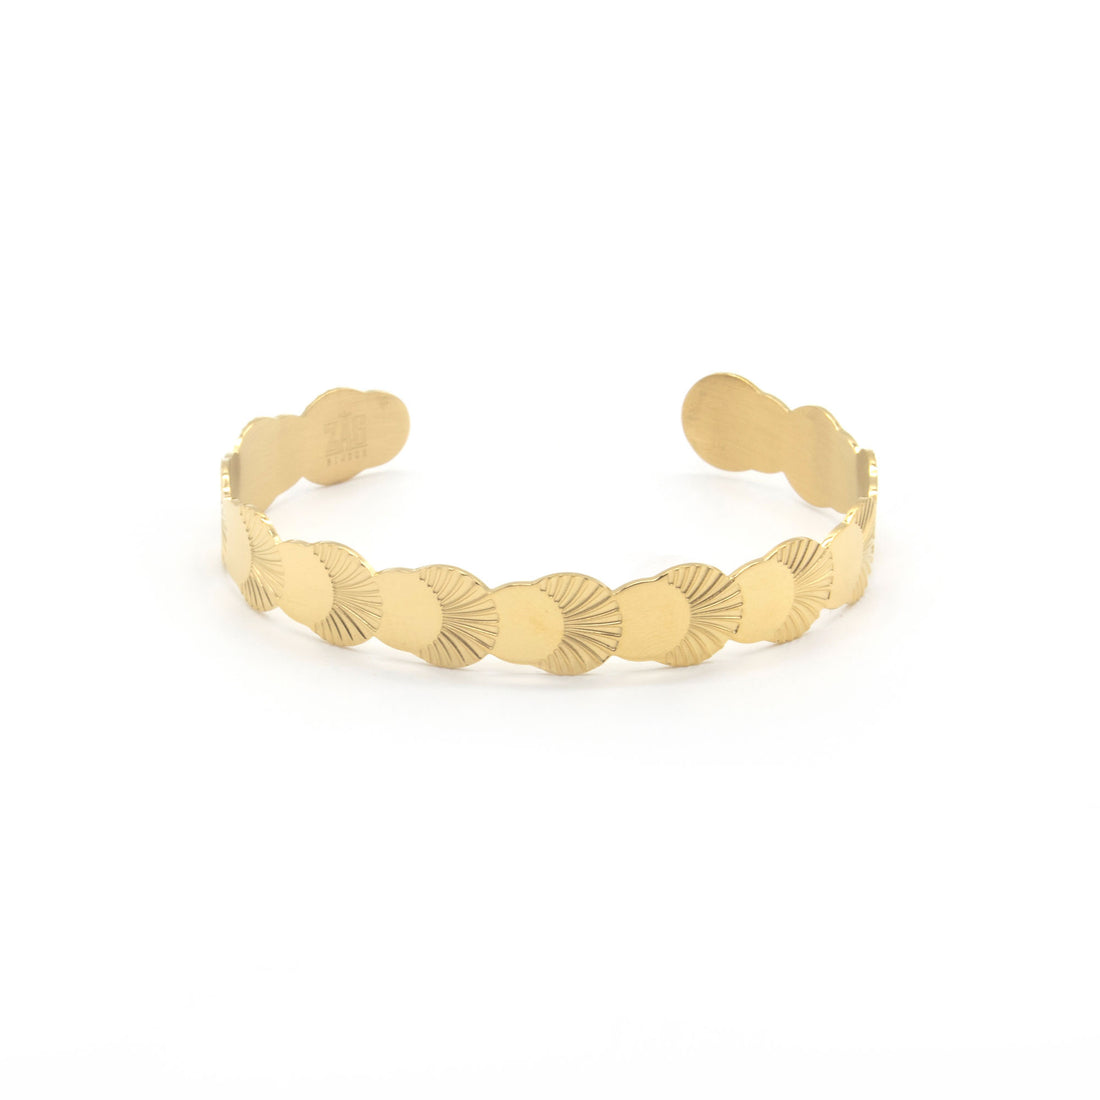 zag-bijoux-bracelet-sbj5596-seashell-gold-uni- (1)